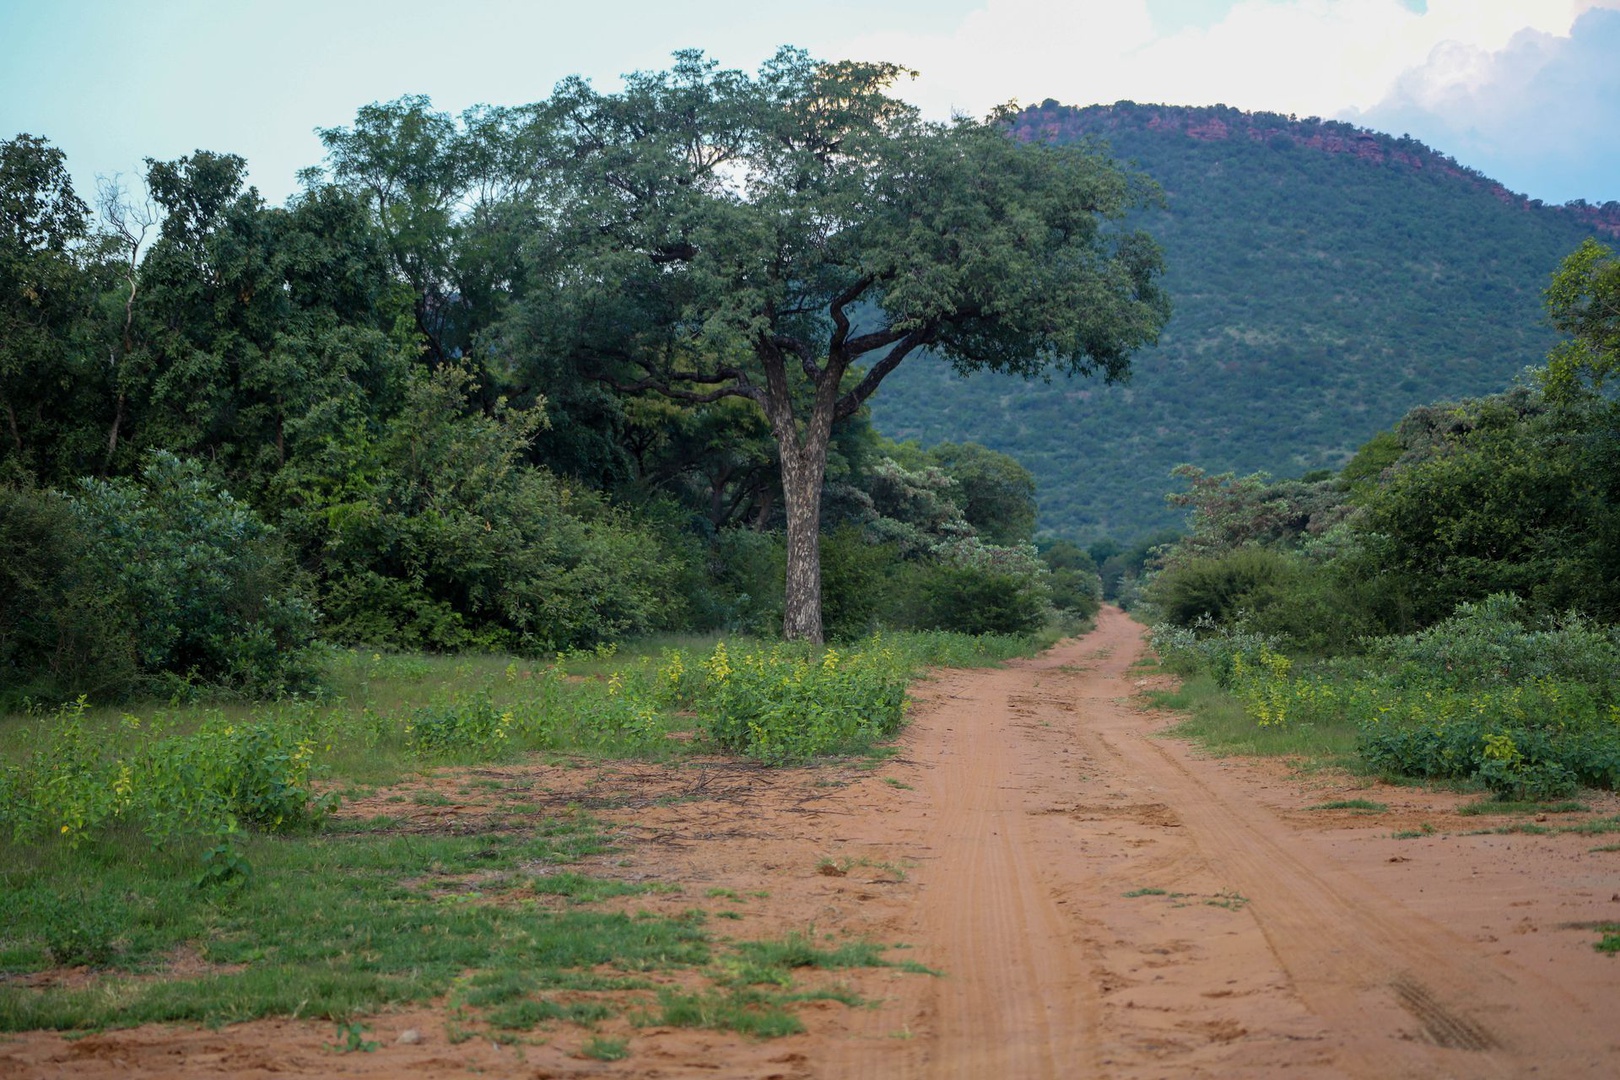 Land in Thabazimbi Rural - Farm roads